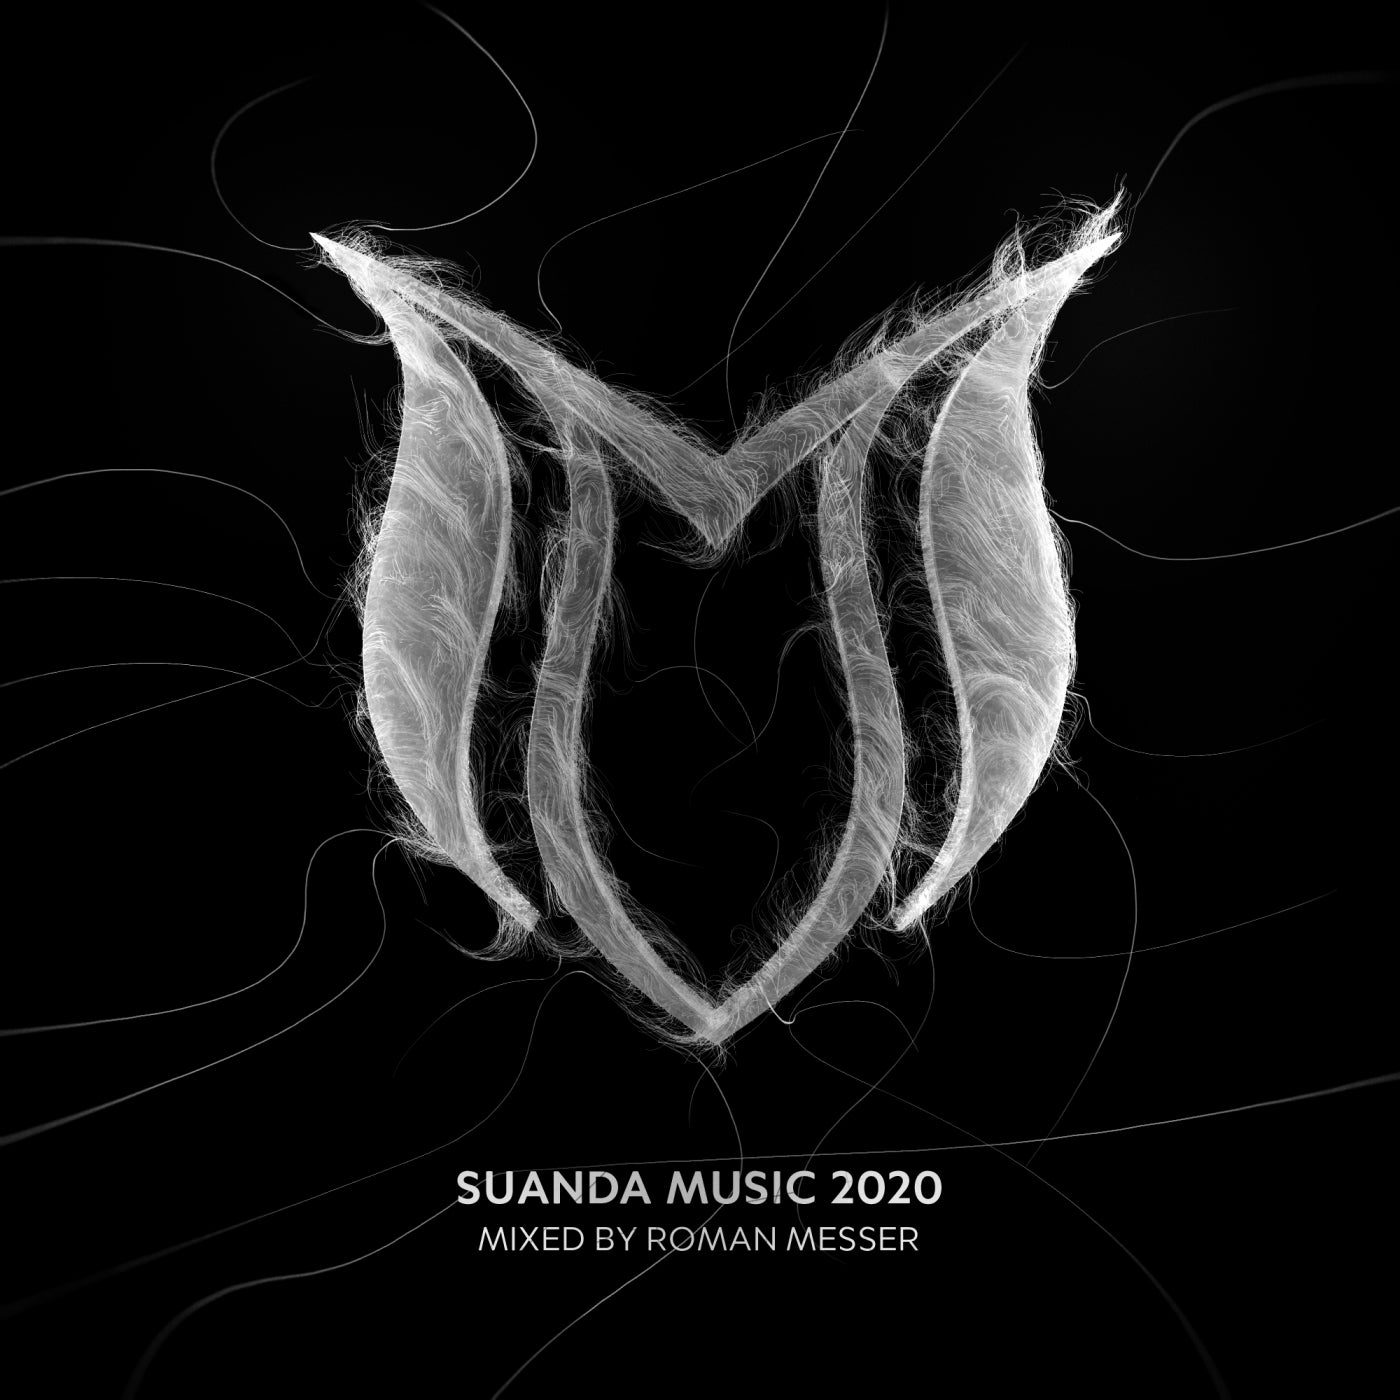 Suanda Music 2020 - Mixed by Roman Messer